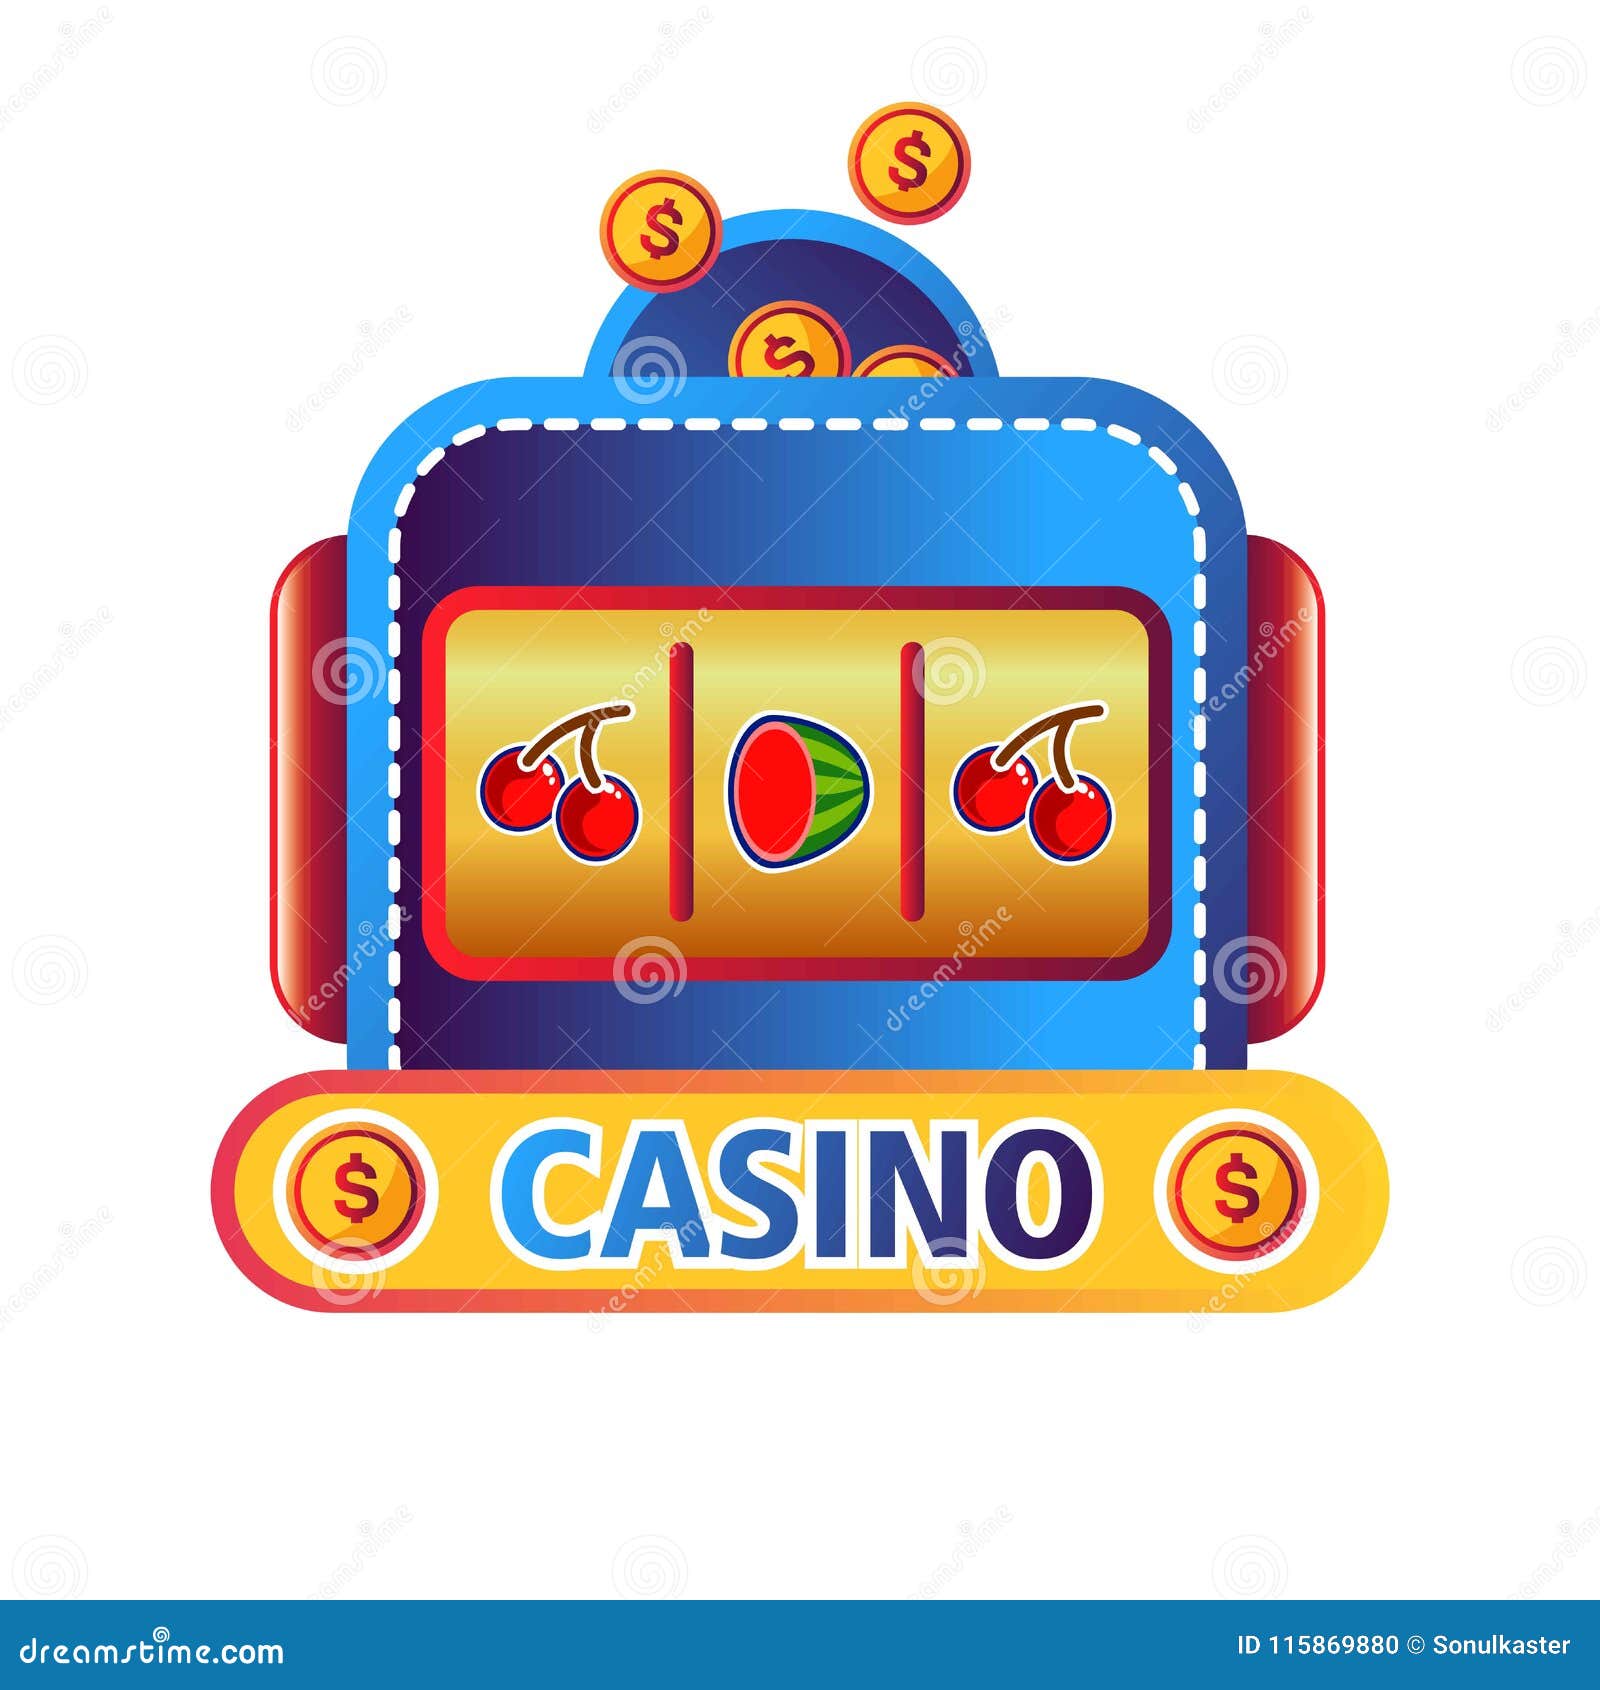 Казино арбуз онлайн принцип работы автомата казино